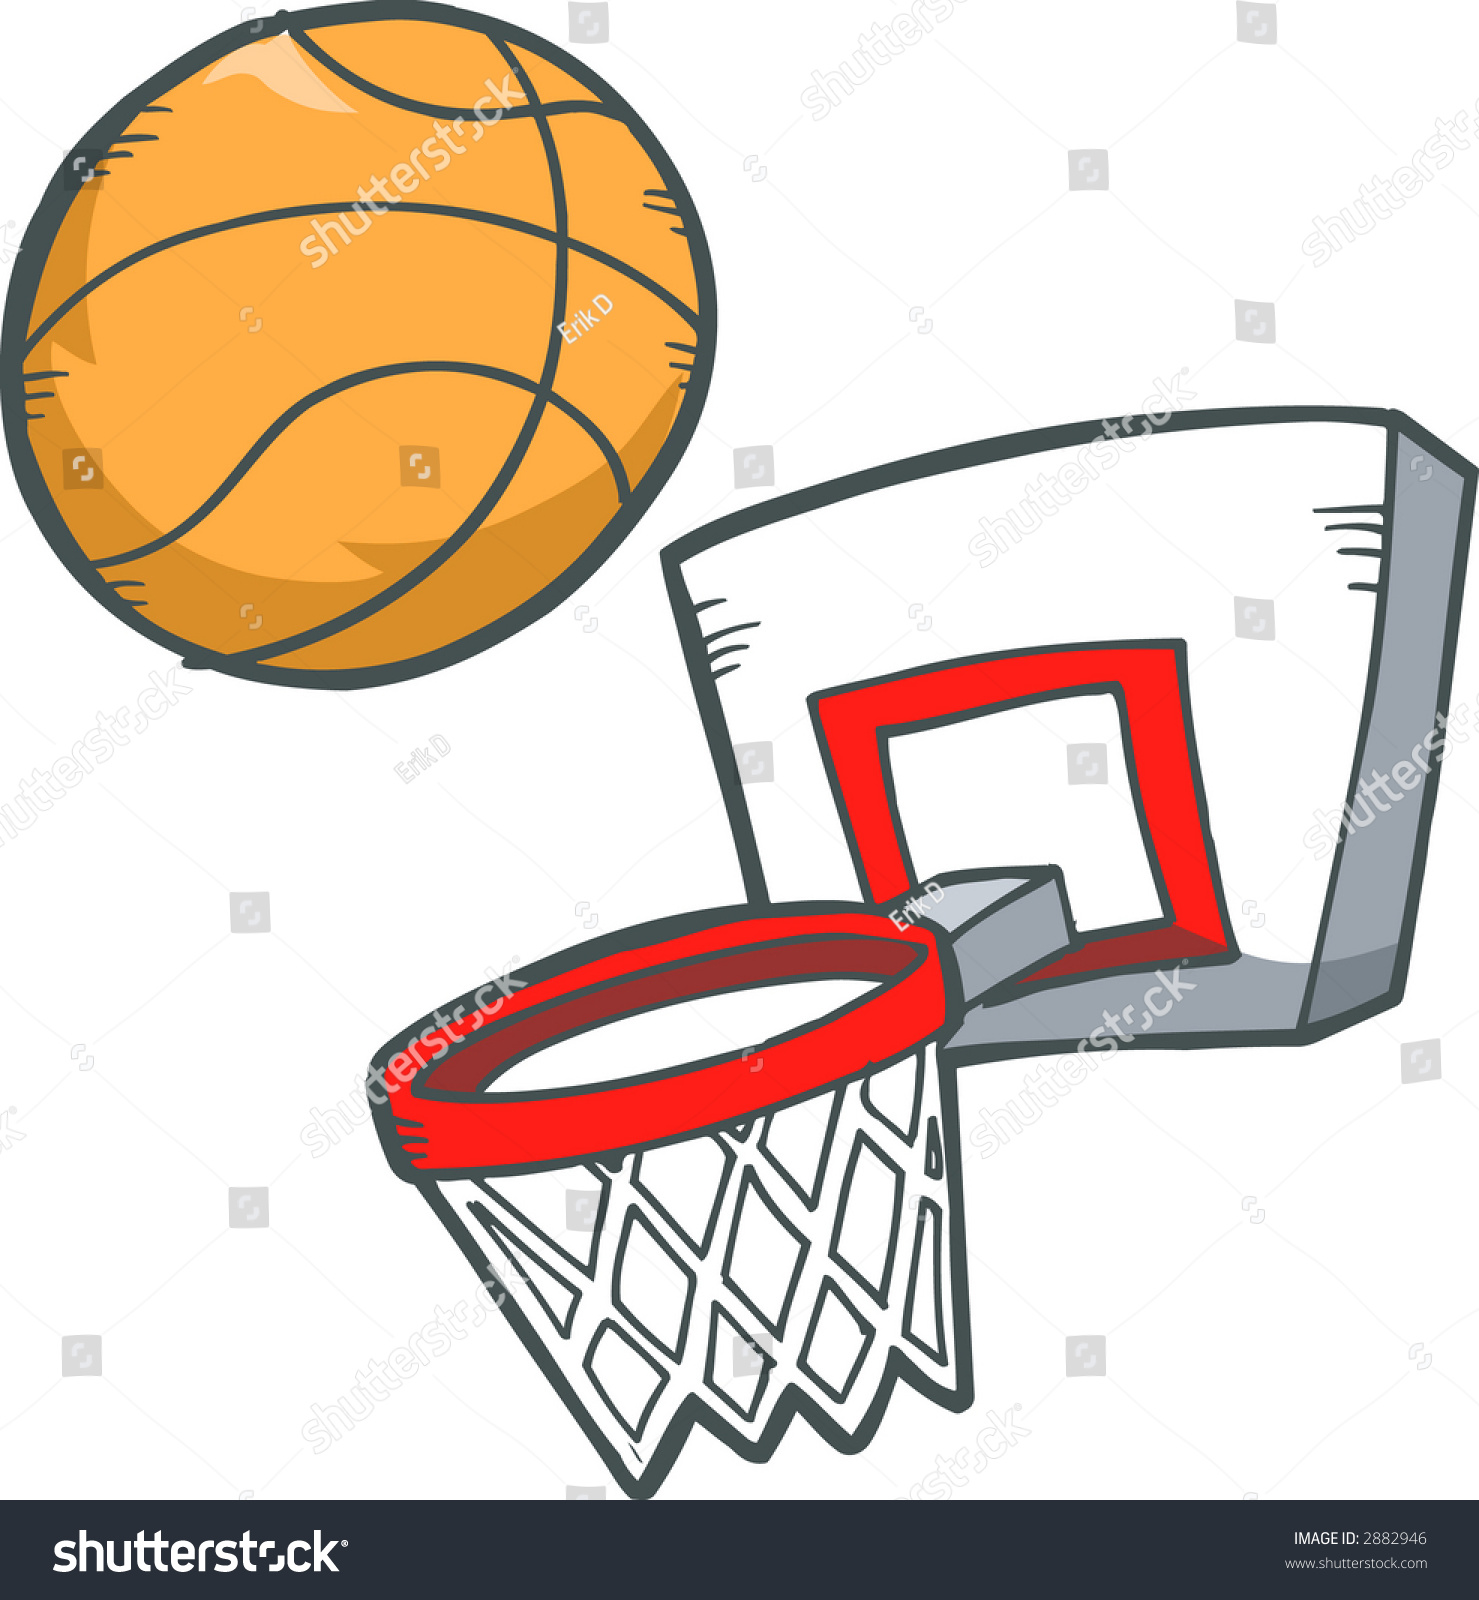 Vector Illustration Of Basketball & Basketball Hoop - 2882946